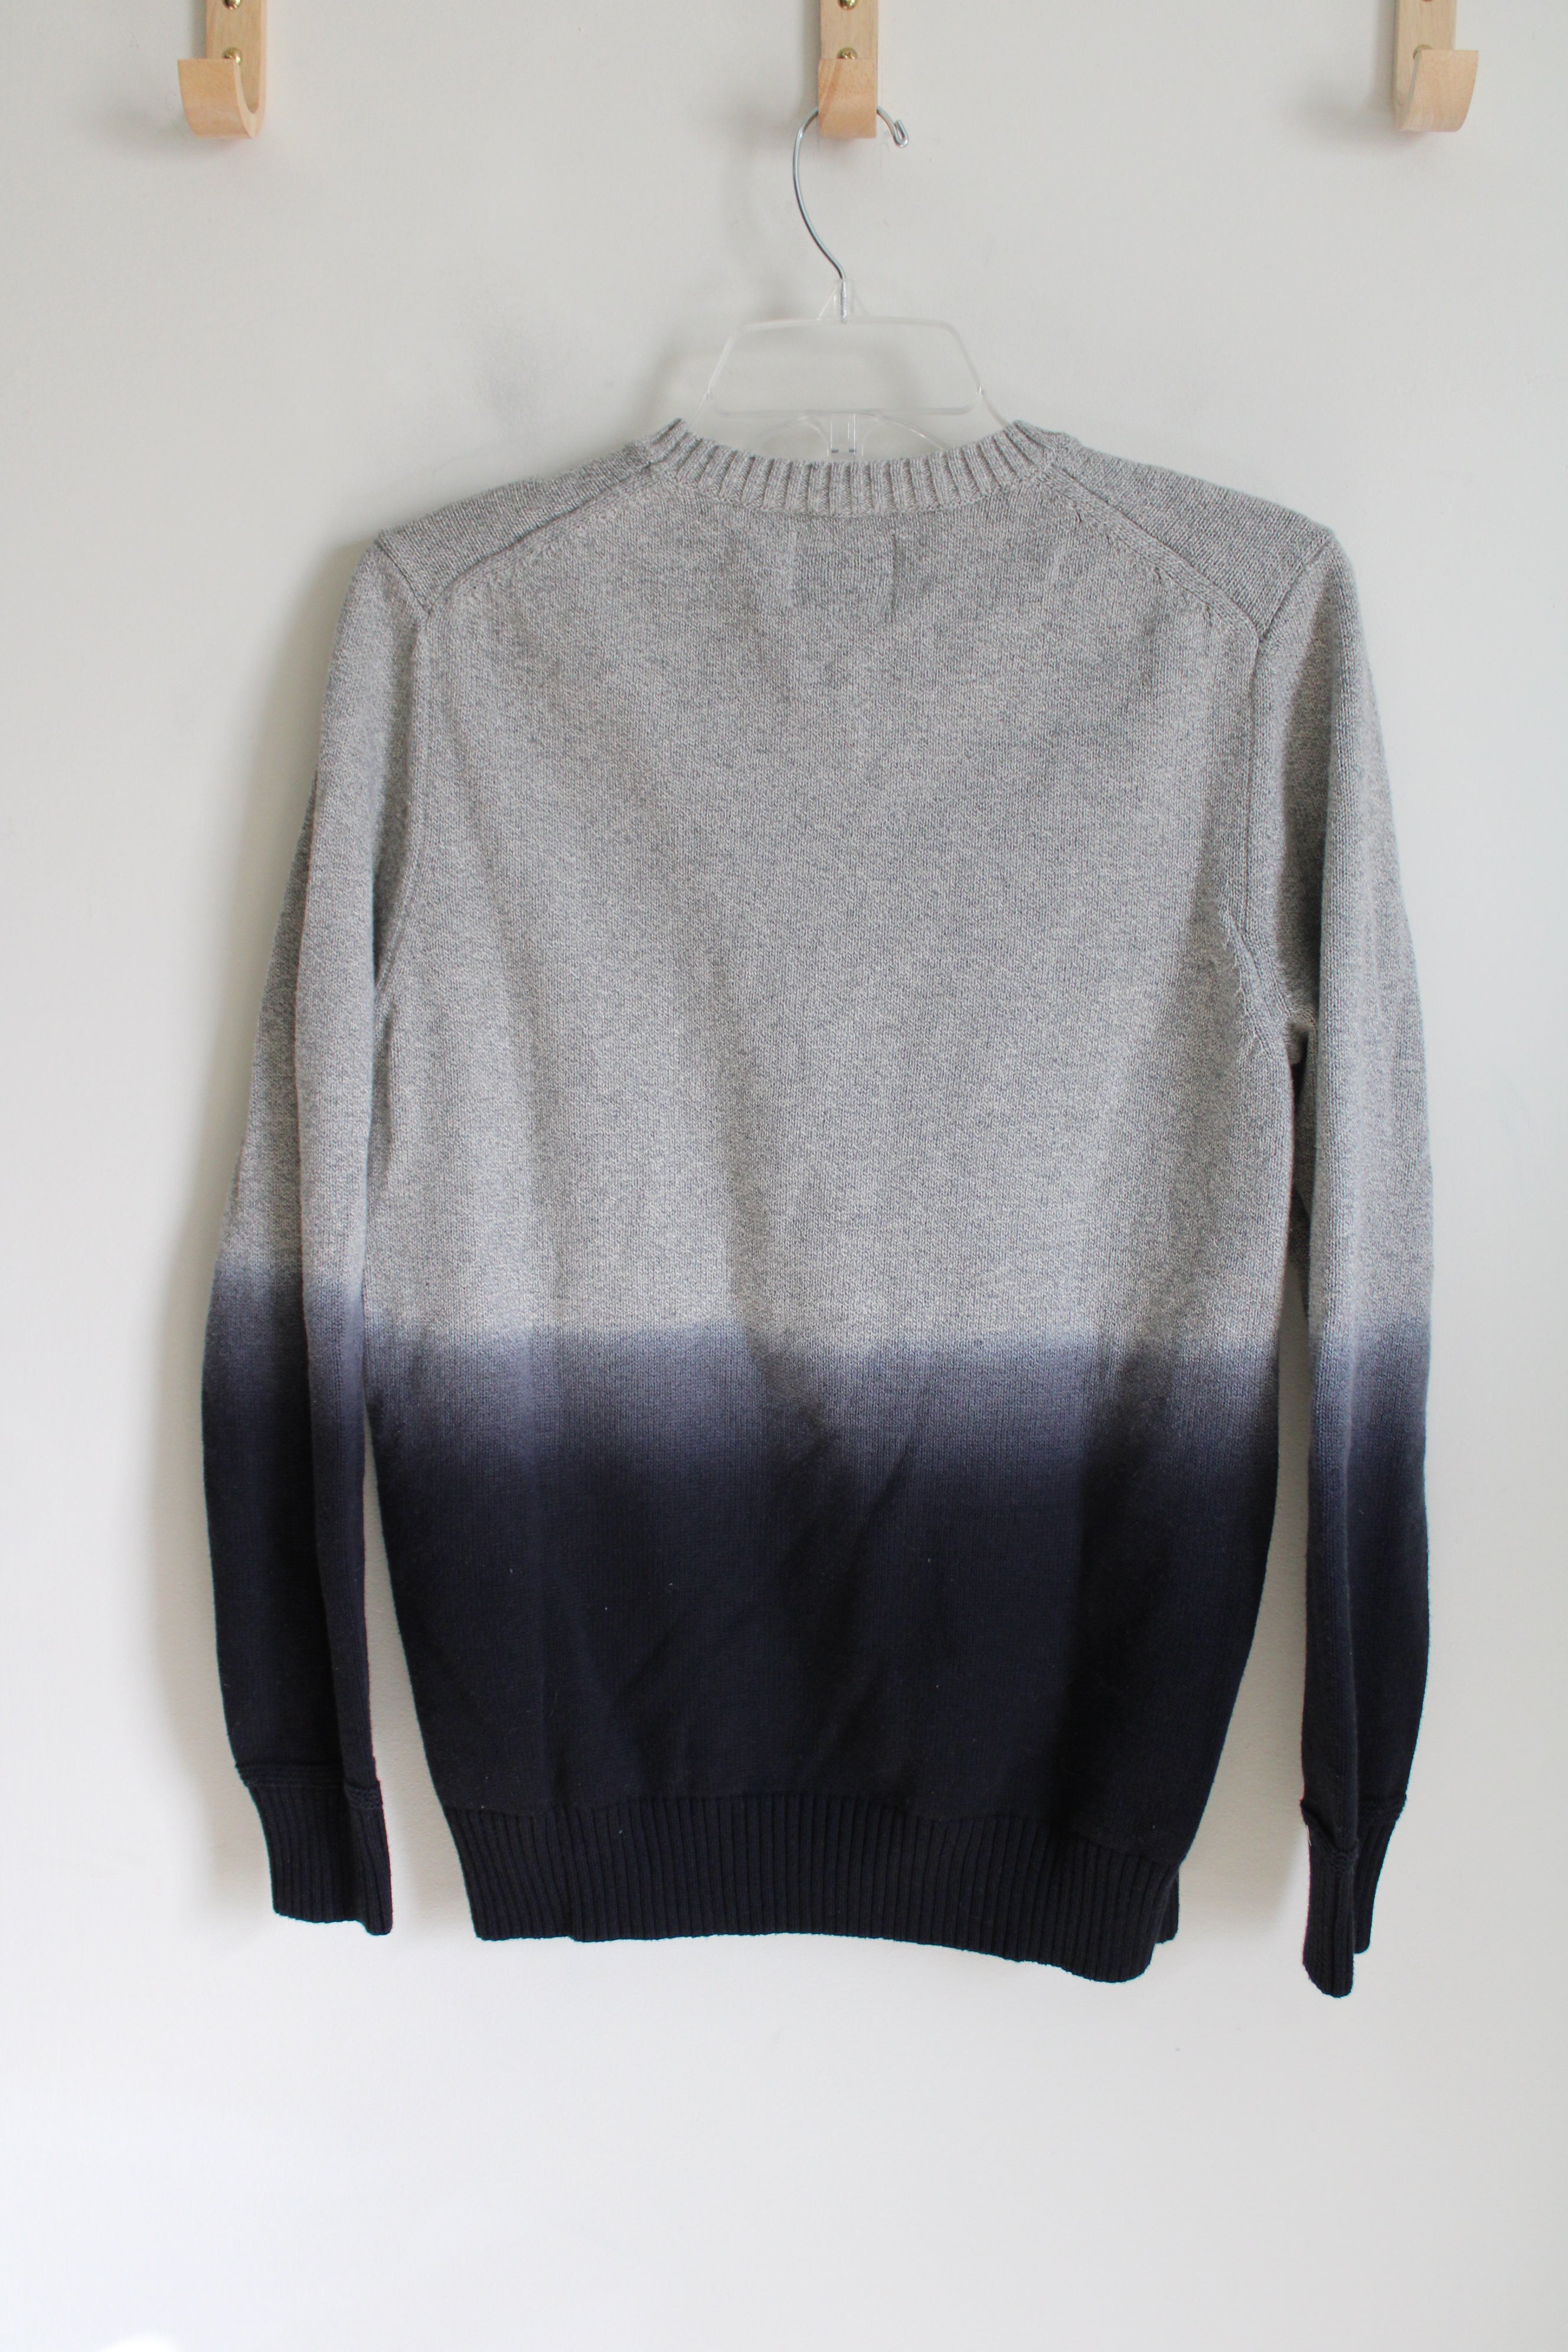 American Eagle Soft Gray Ombre Sweater | M